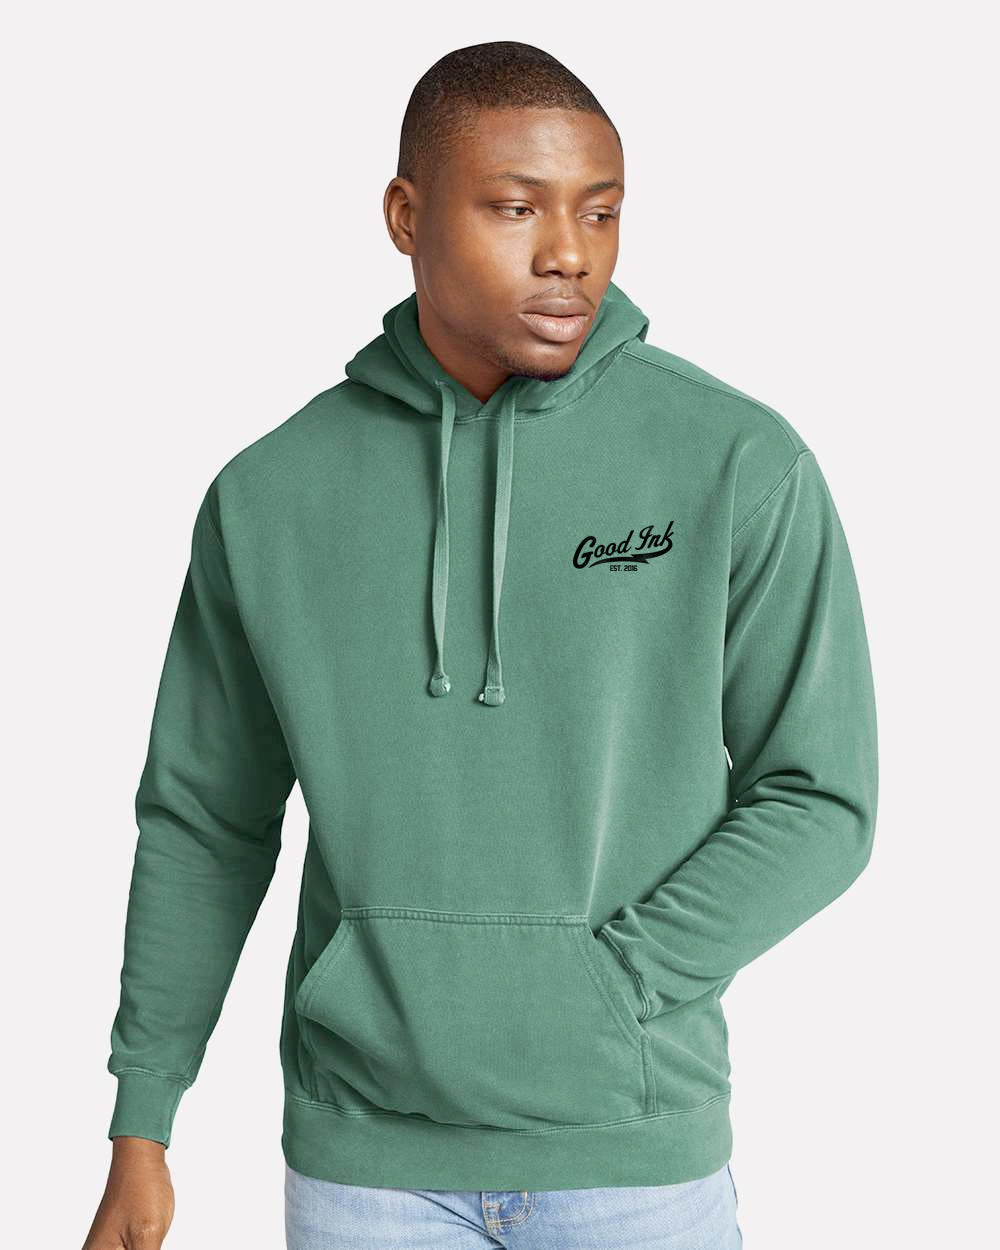 Custom Hoodies & Sweatshirts